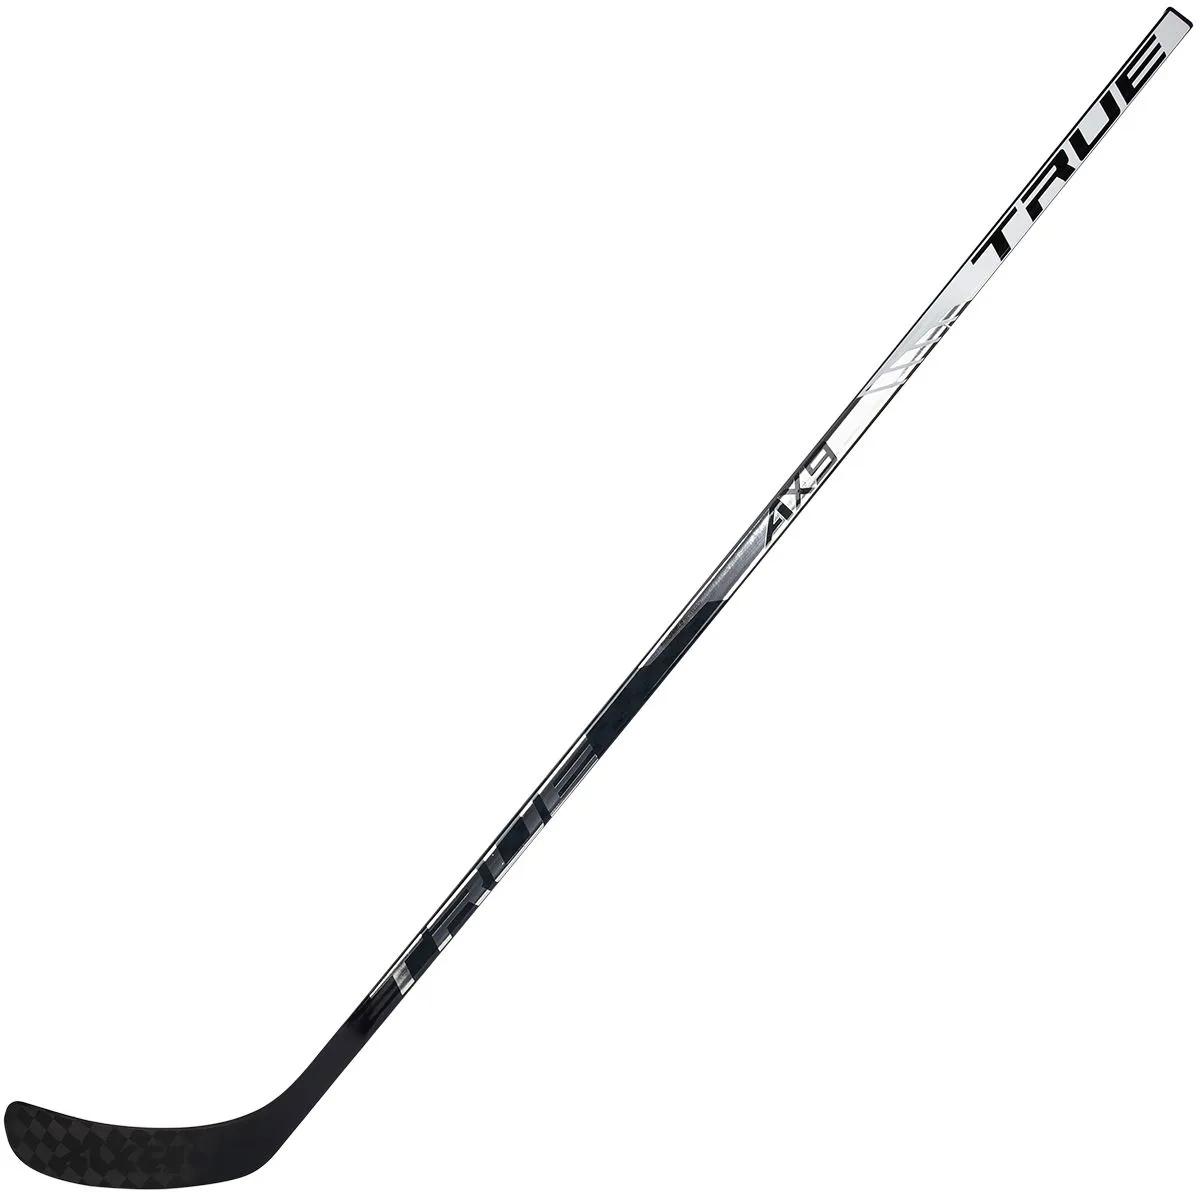 True AX9 Jr. Hockey Stickproduct zoom image #1